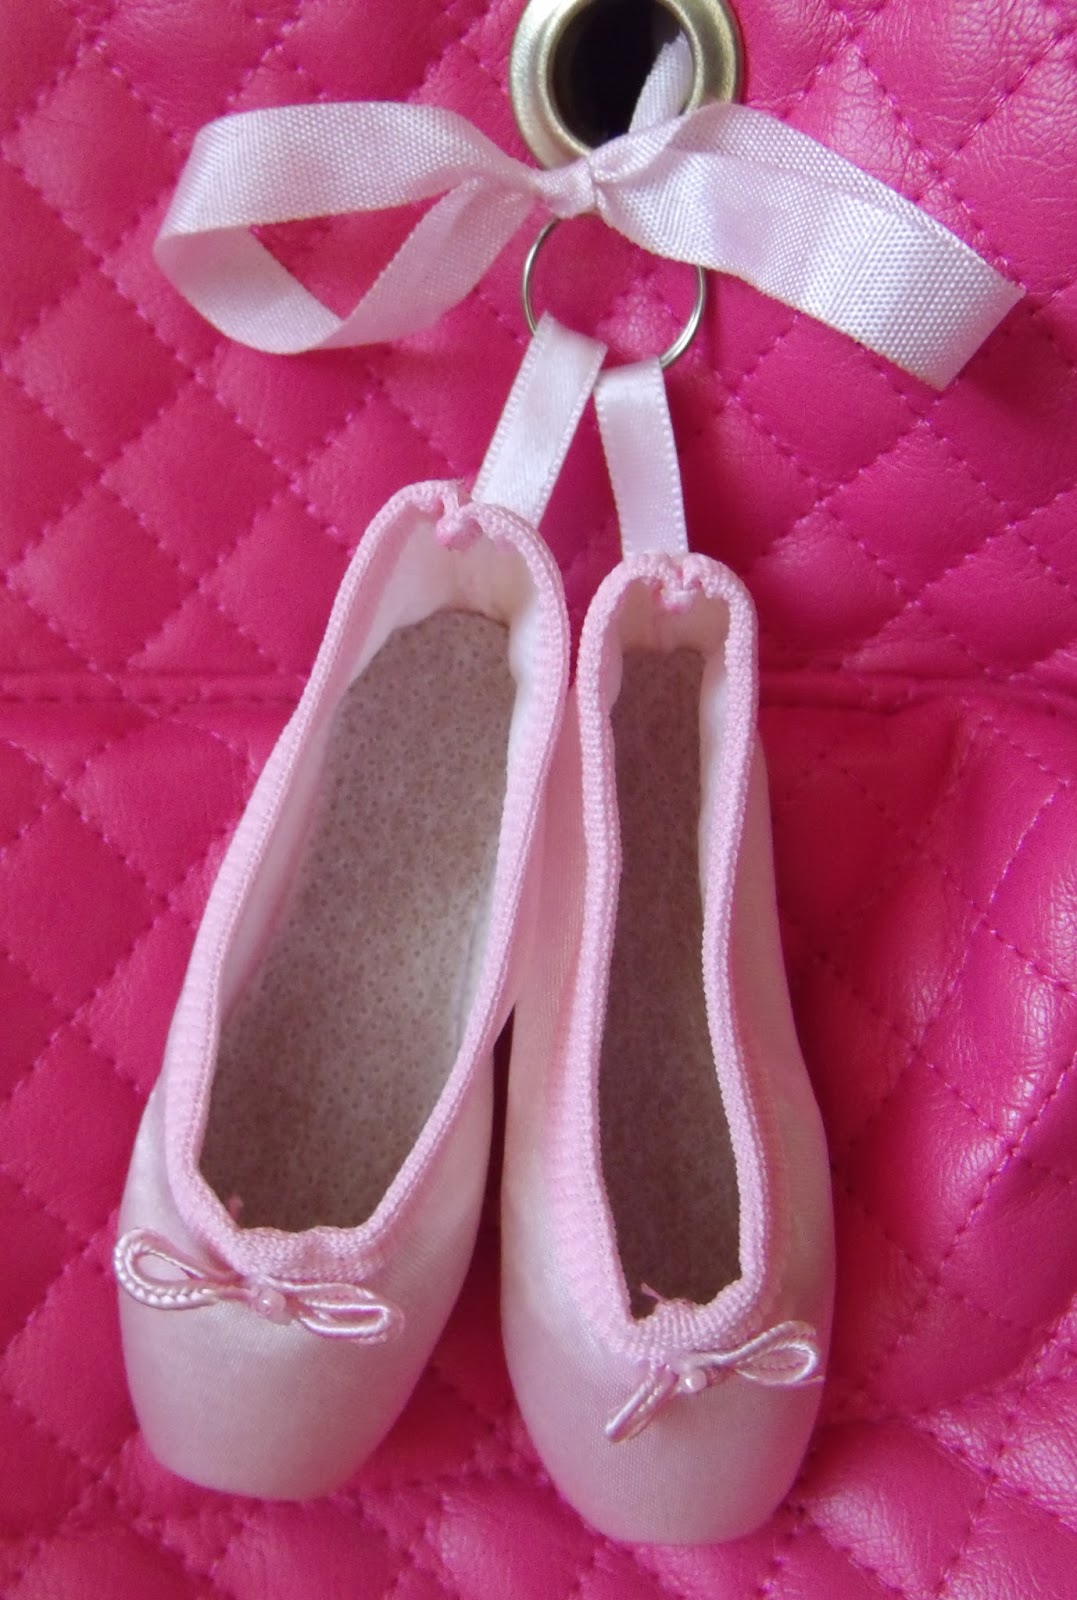 mochila rosa, amo muito, caderno rosa, caderno fofo, personalizados, bailarina, balé clássico, ballet, sapatilhas